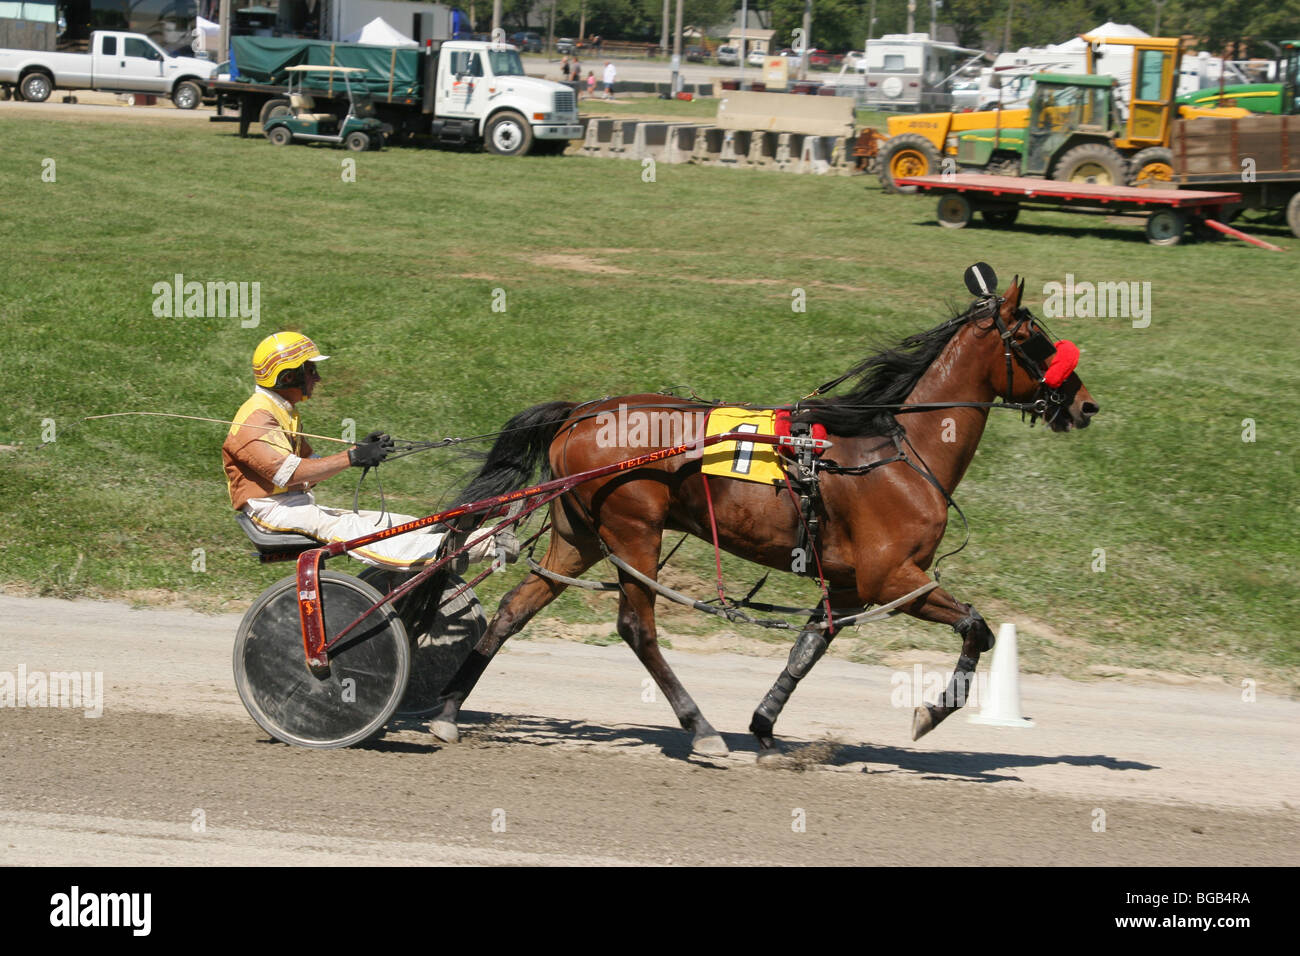 Harness Racing. Horse Racing. Canfield Fair, Canfield, Ohio, USA. Stock Photo